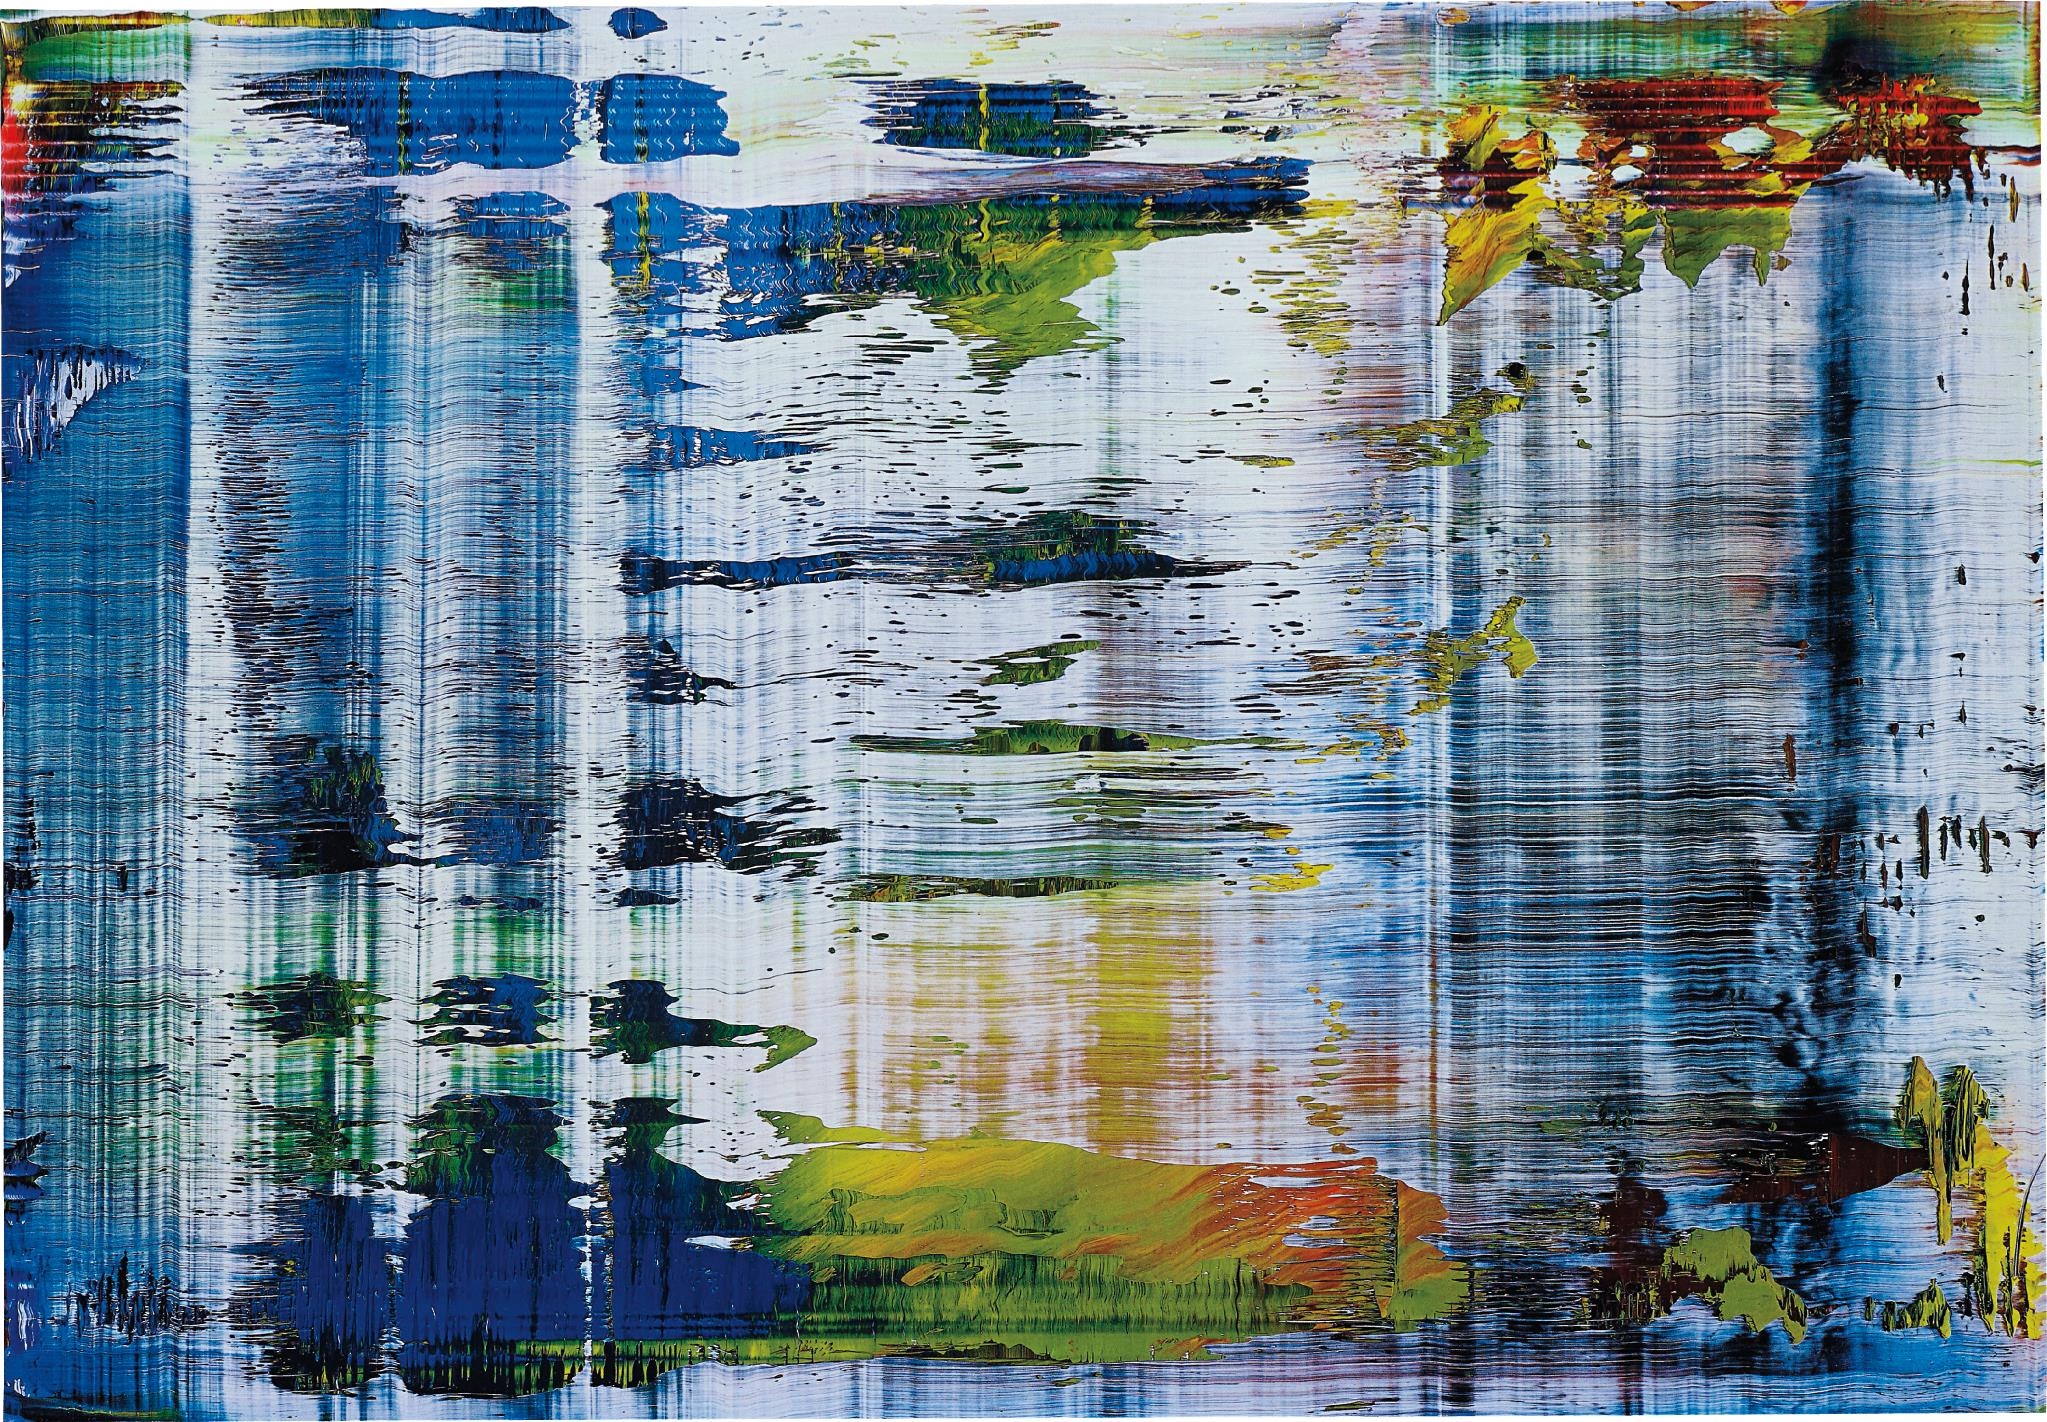 Untitled by Gerhard Richter, 2006